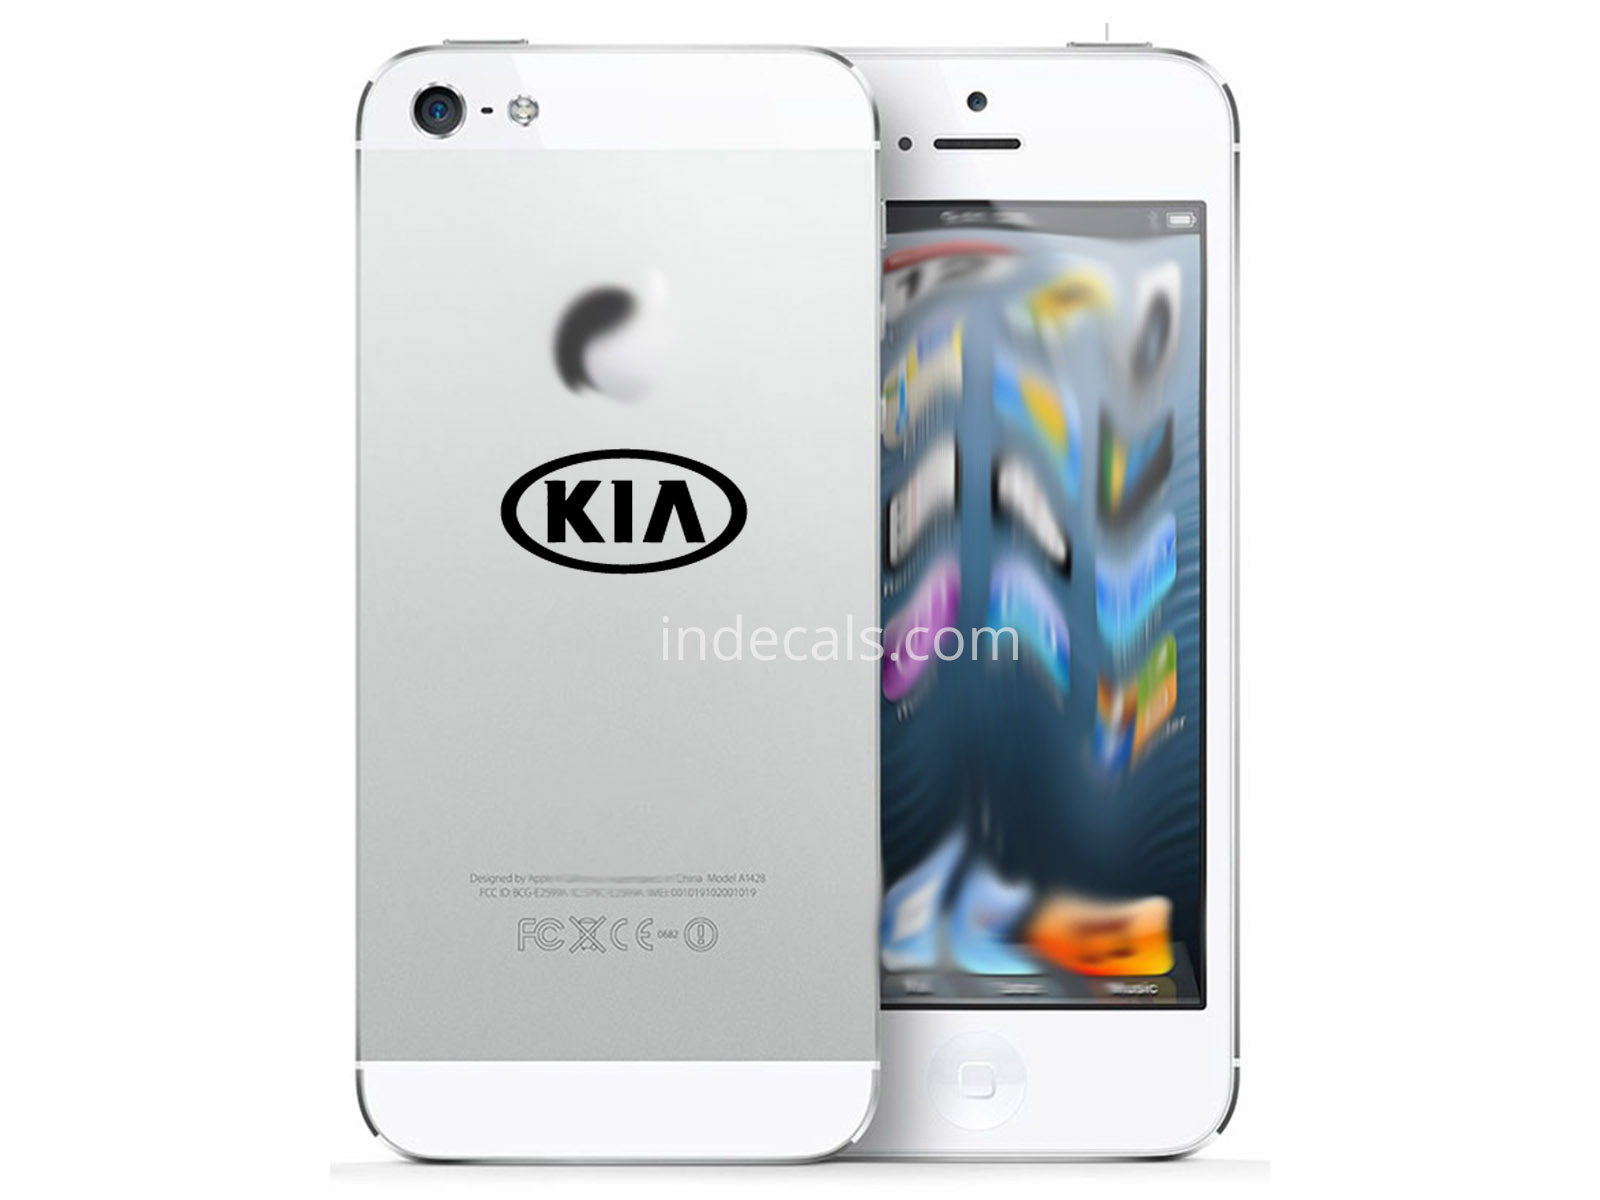 3 x KIA Stickers for Smartphone - Black